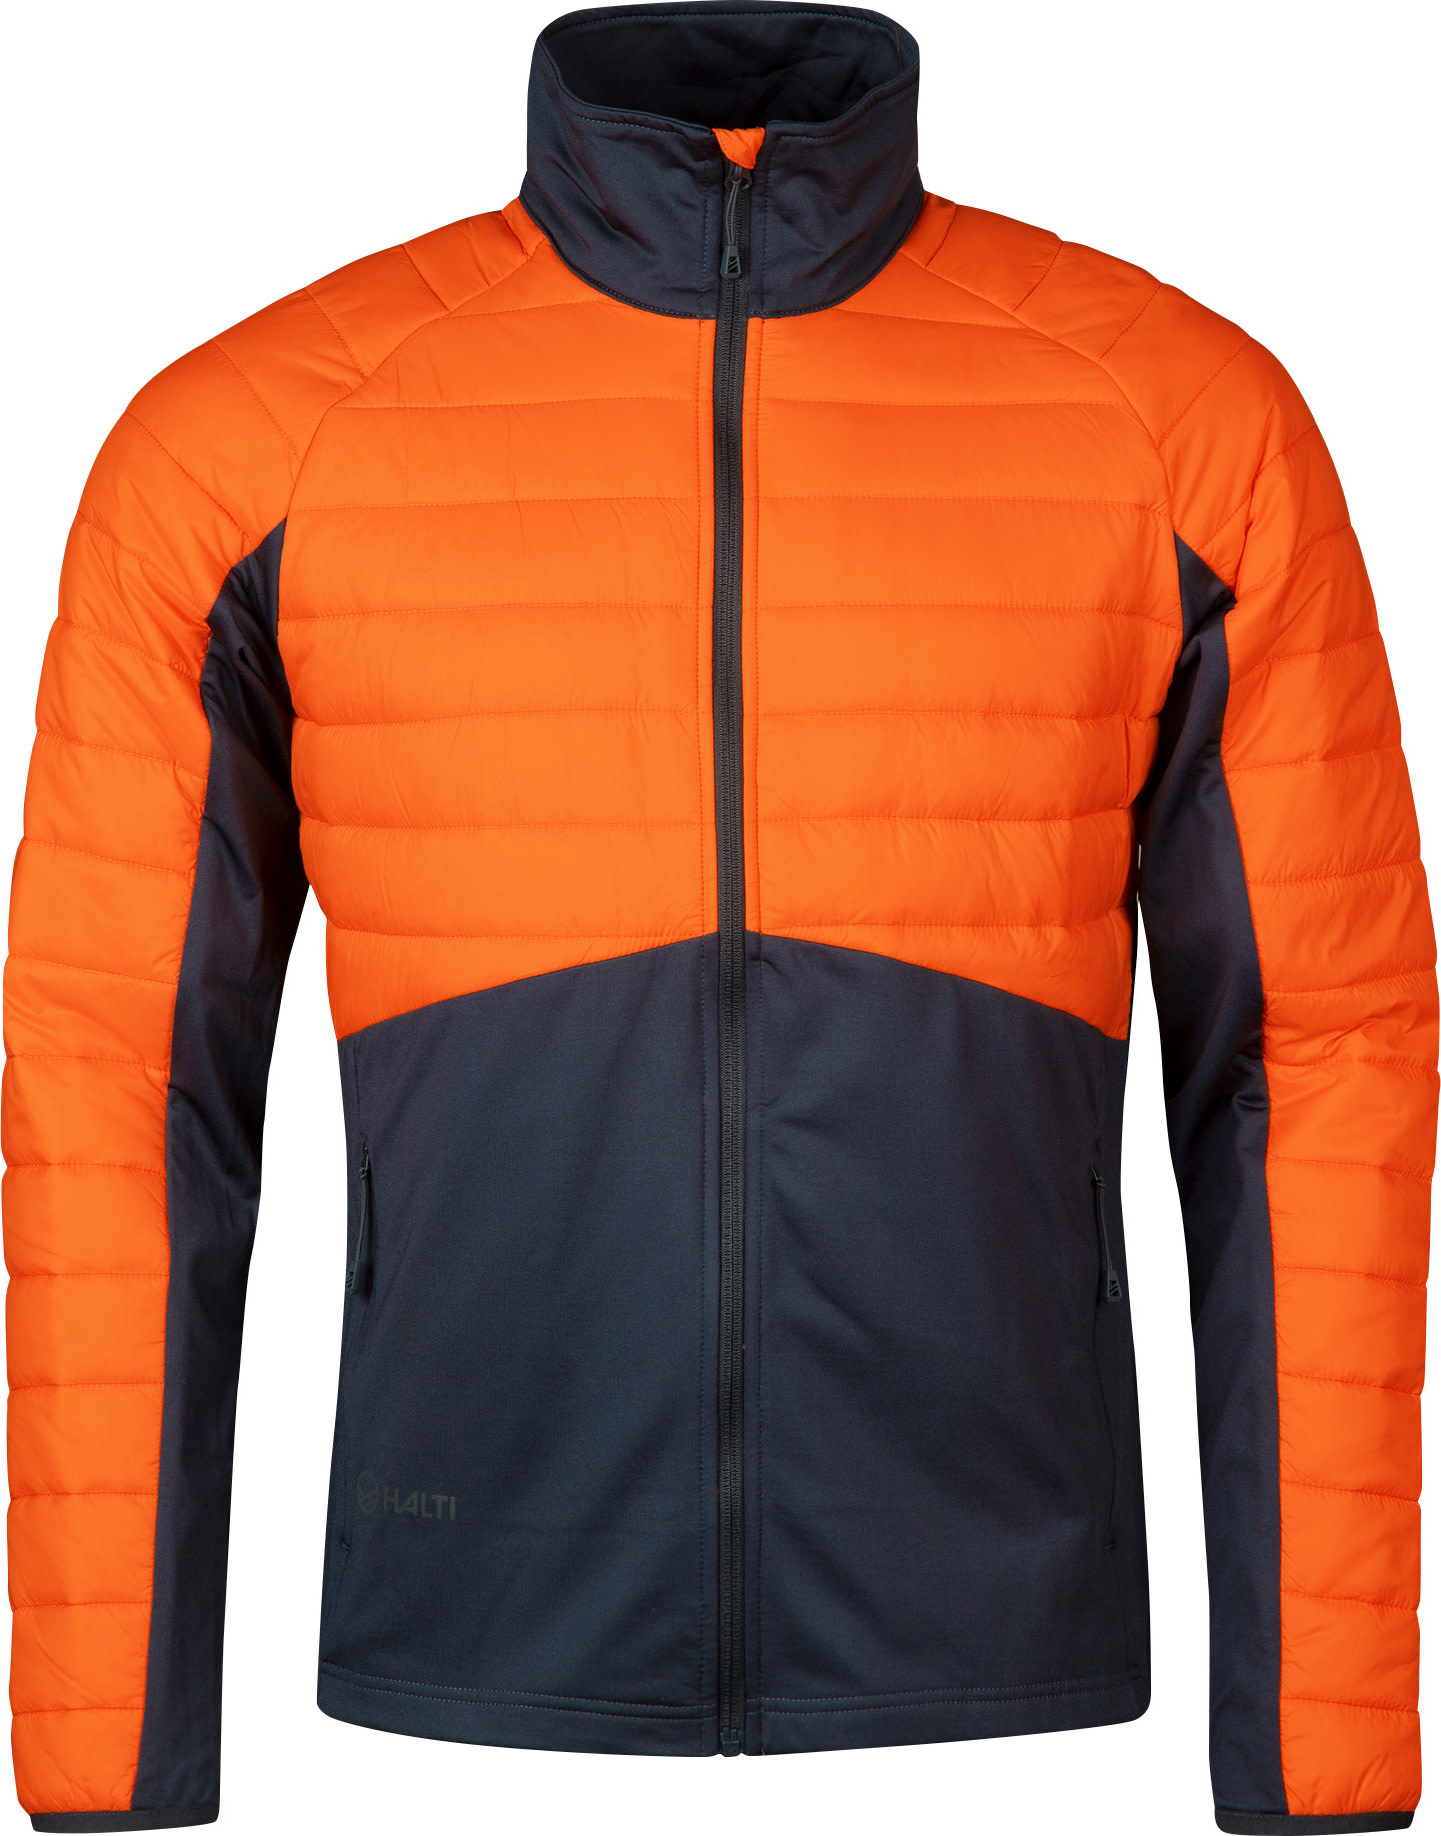 Halti Men’s Dynamic Insulation Jacket Orange Tiger